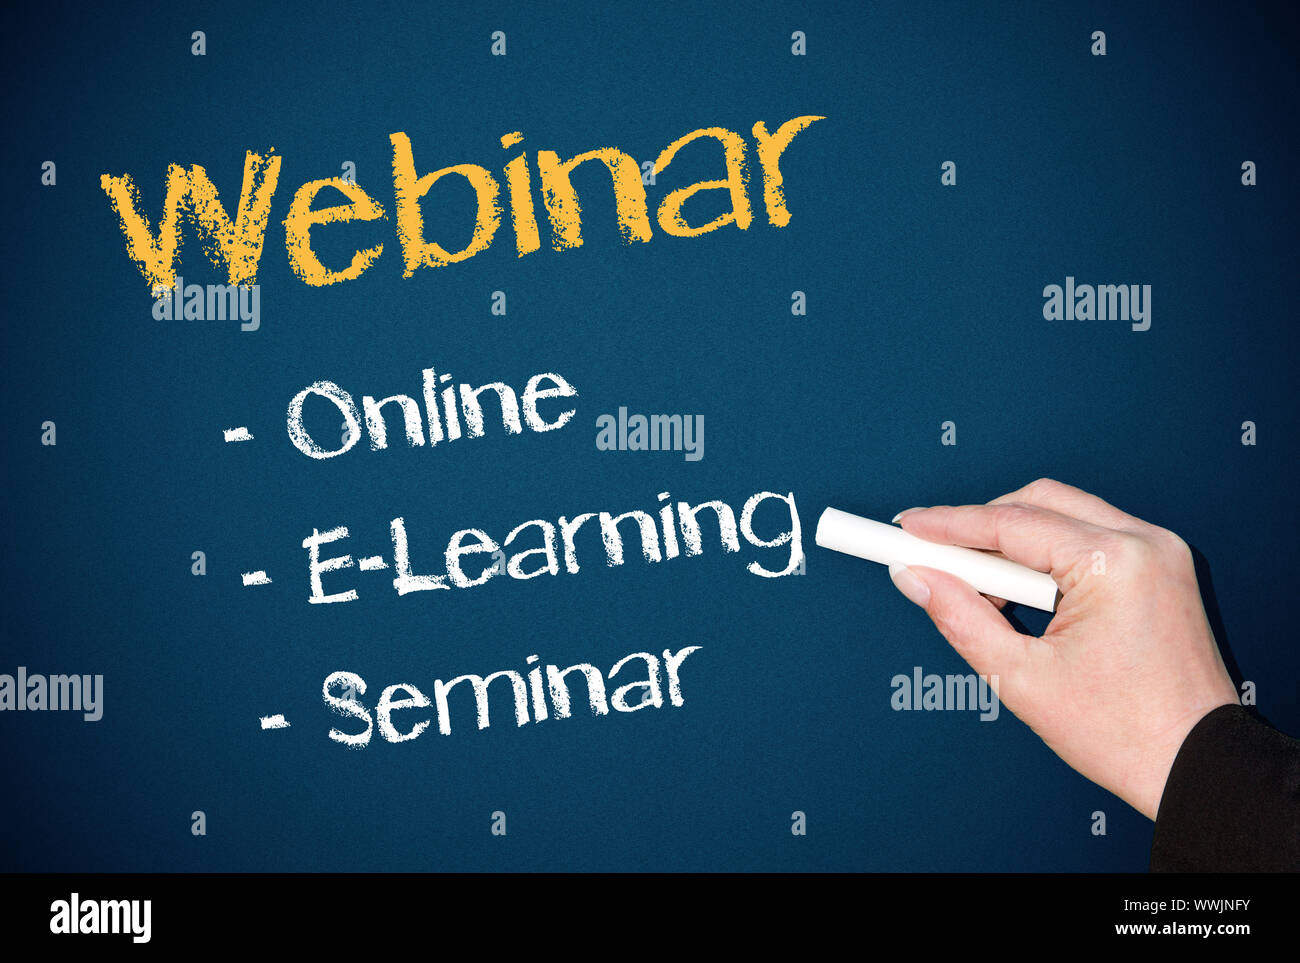 Webinar - Online E-Learning Seminar Stock Photo